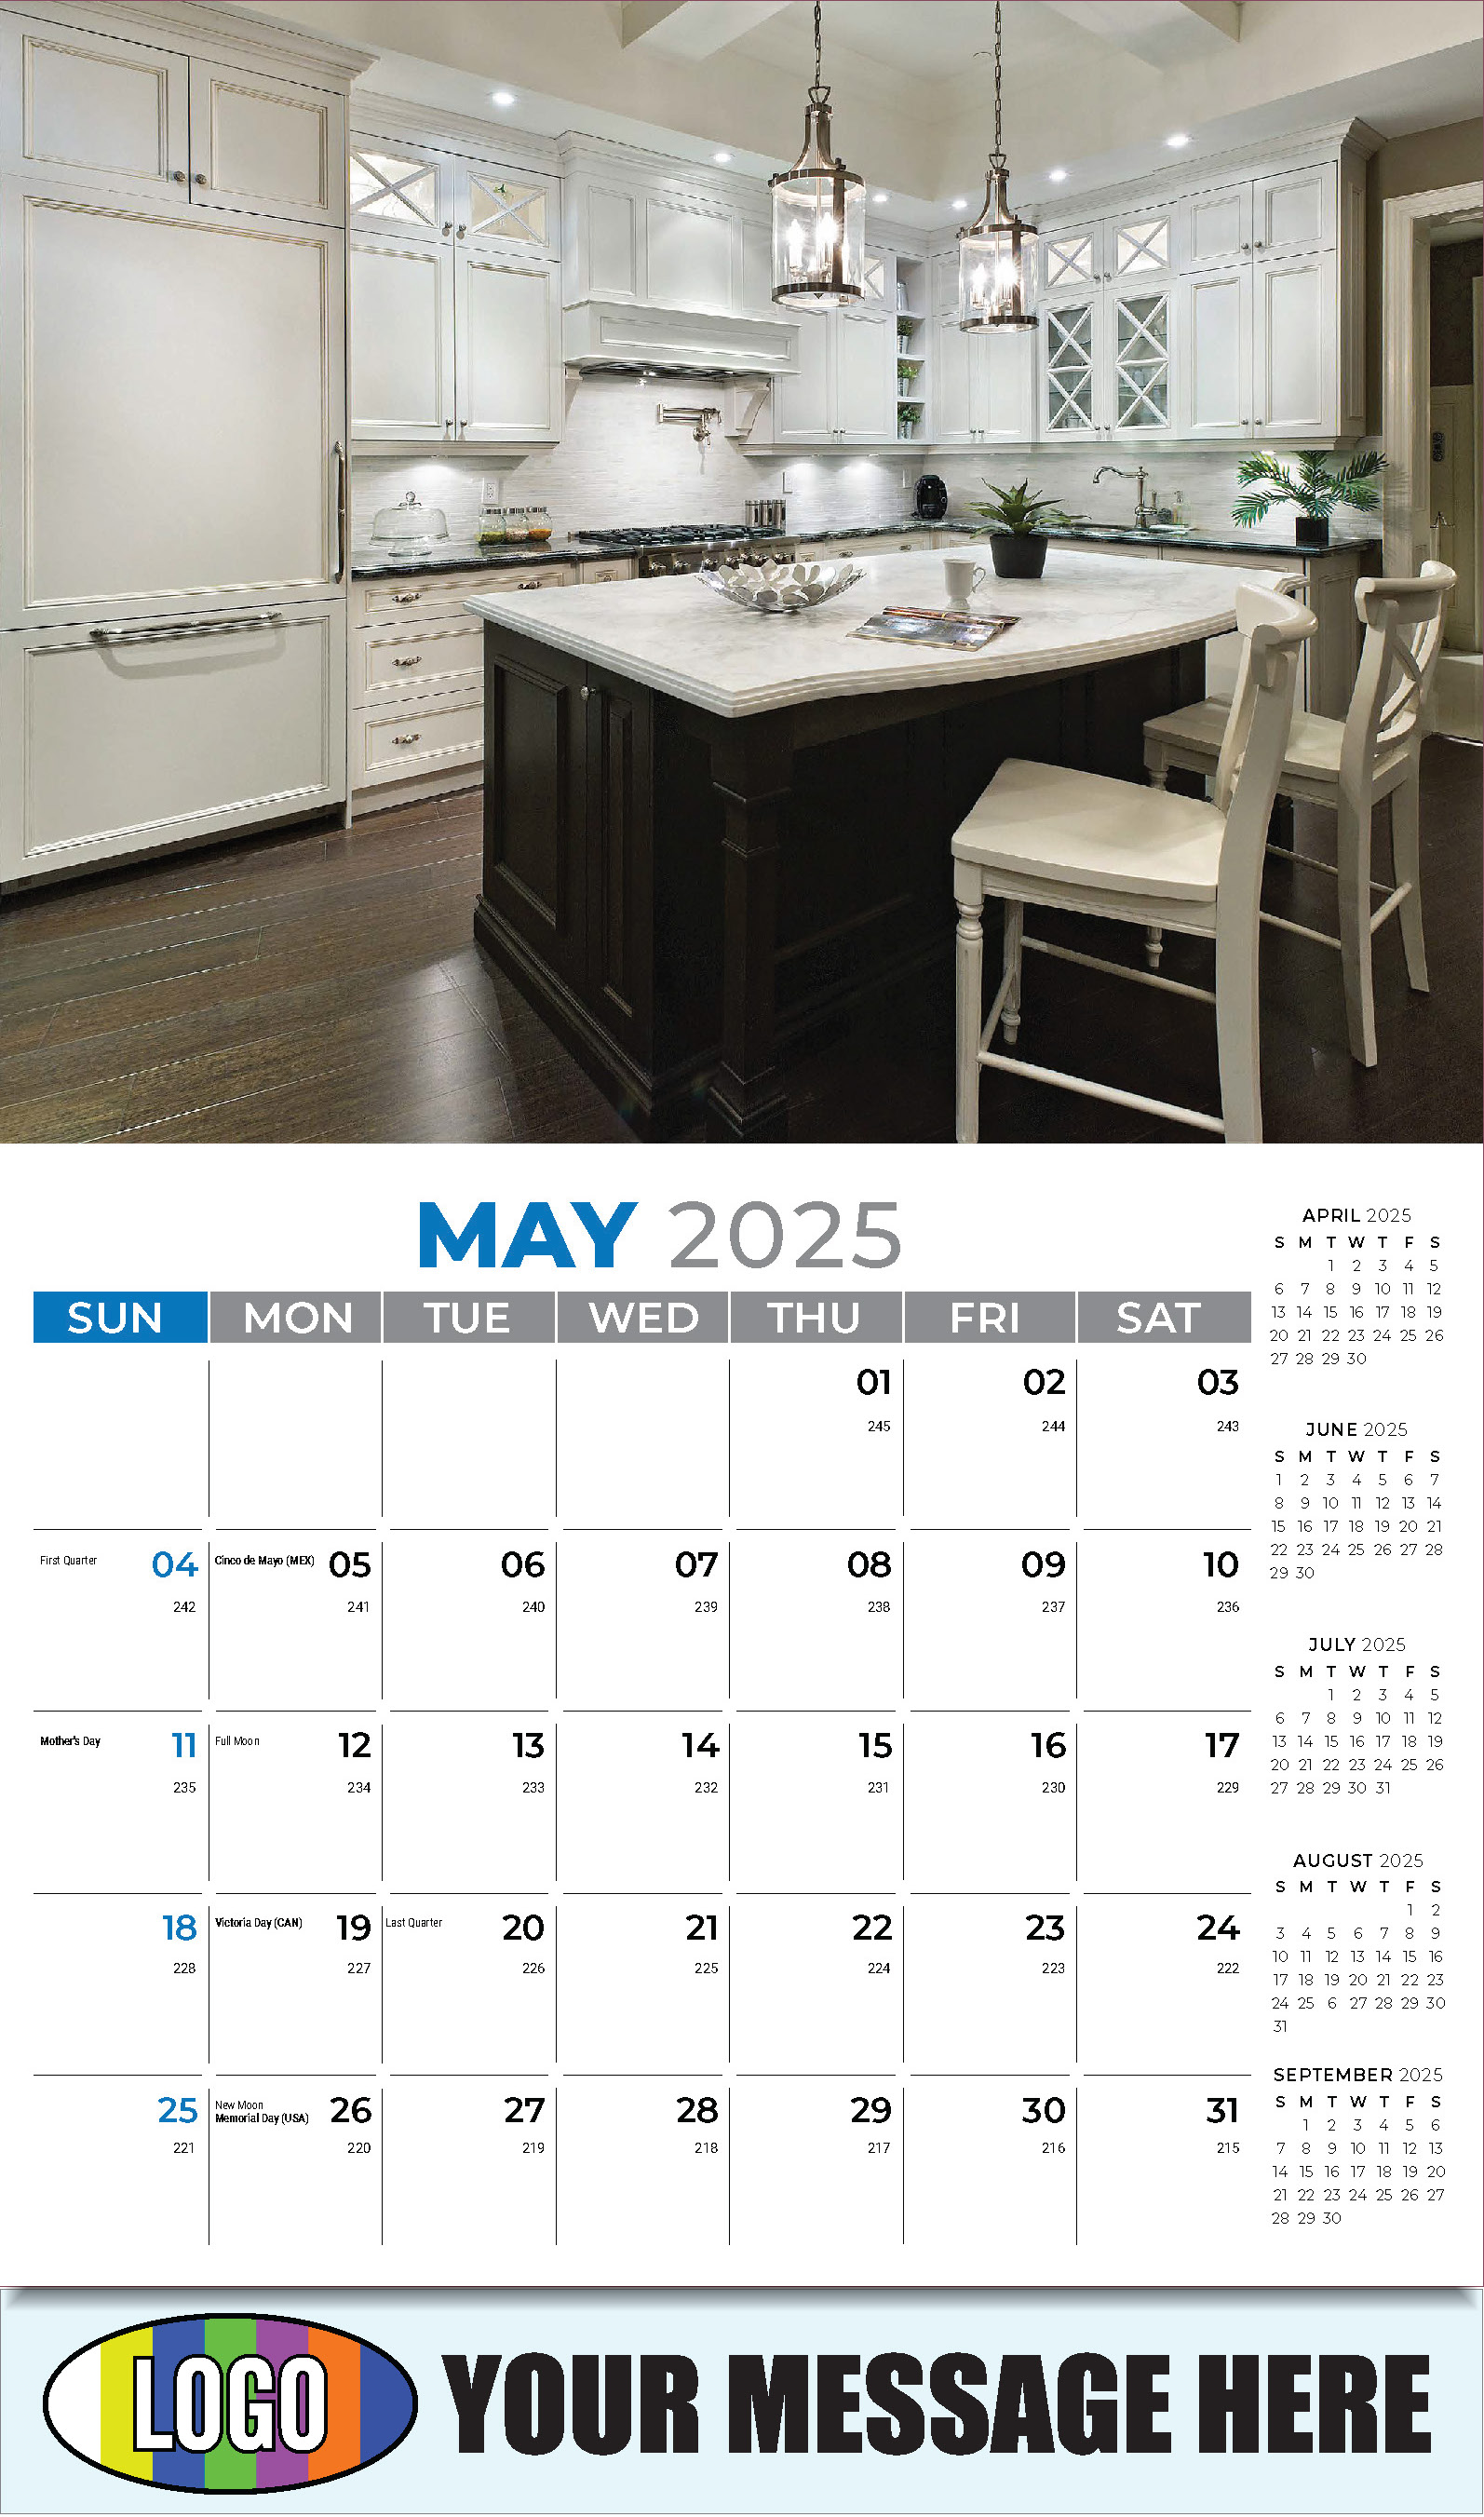 Decor and Design 2025 Interior Design Business Promotional Calendar - May